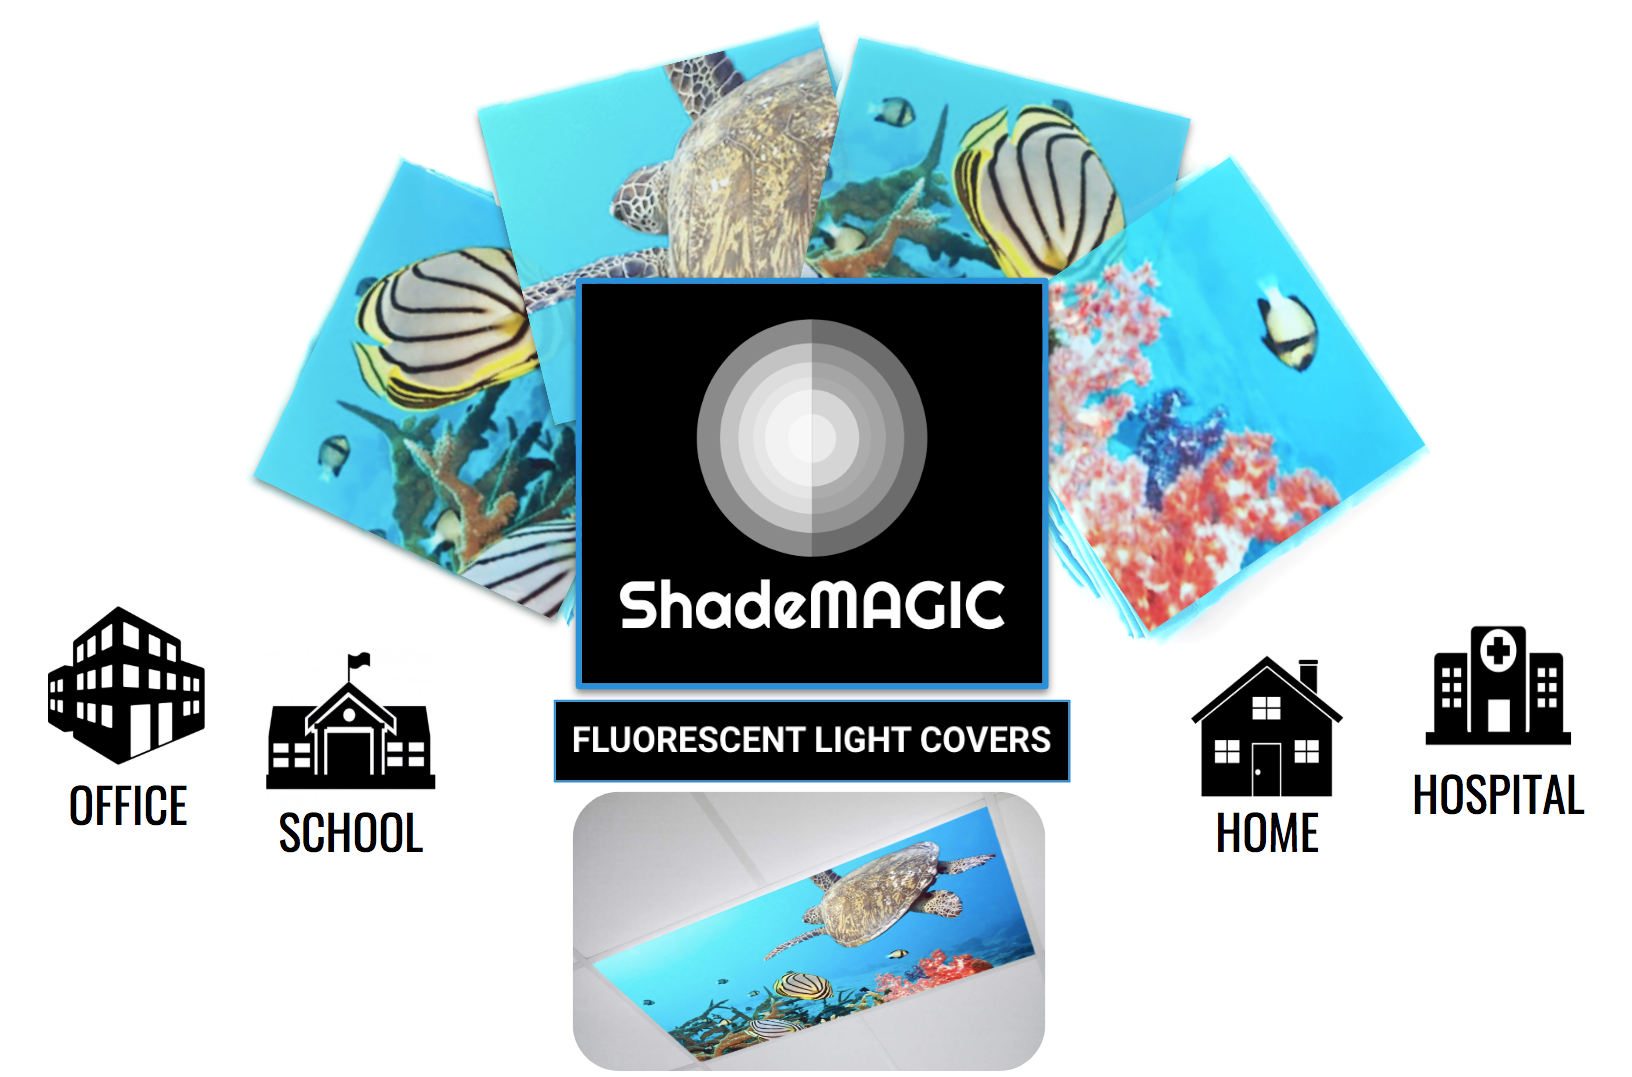 ShadeMAGIC Fluorescent Light Covers - Light Filter - Under the Sea